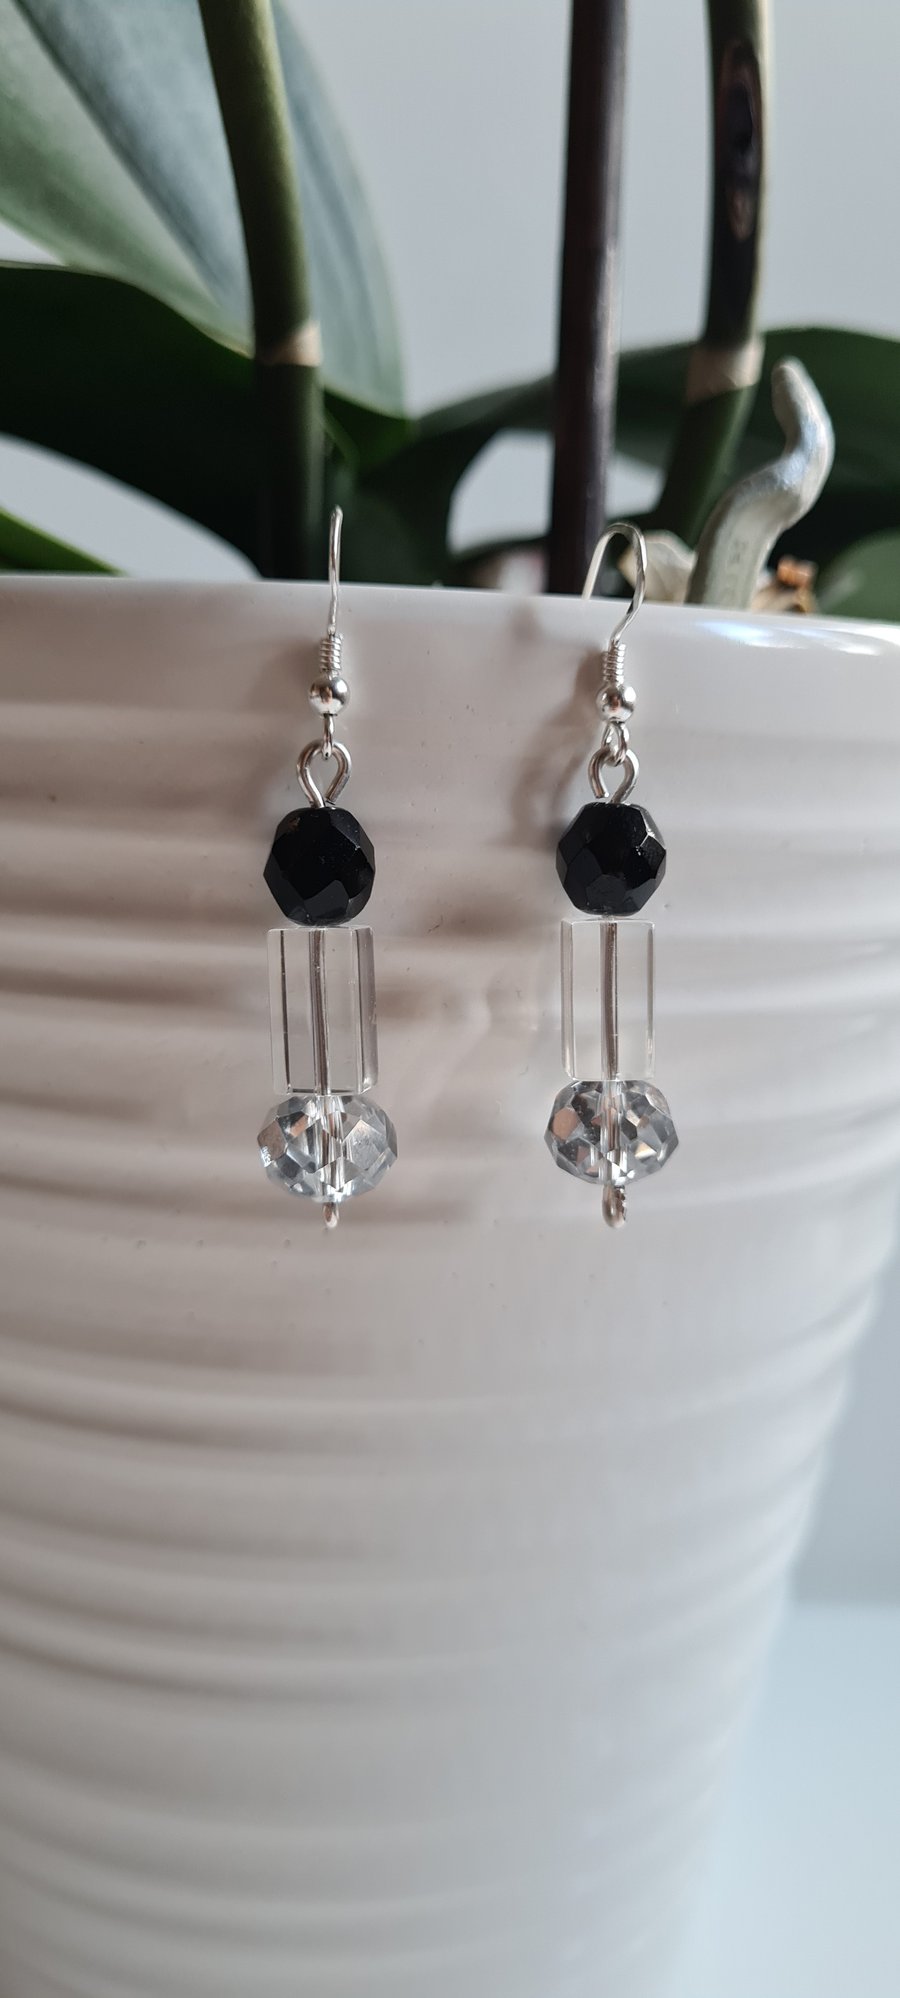 Handmade Elegant 925 Silver & Black Glass Dangle Earrings Gift Boxed Jewellery